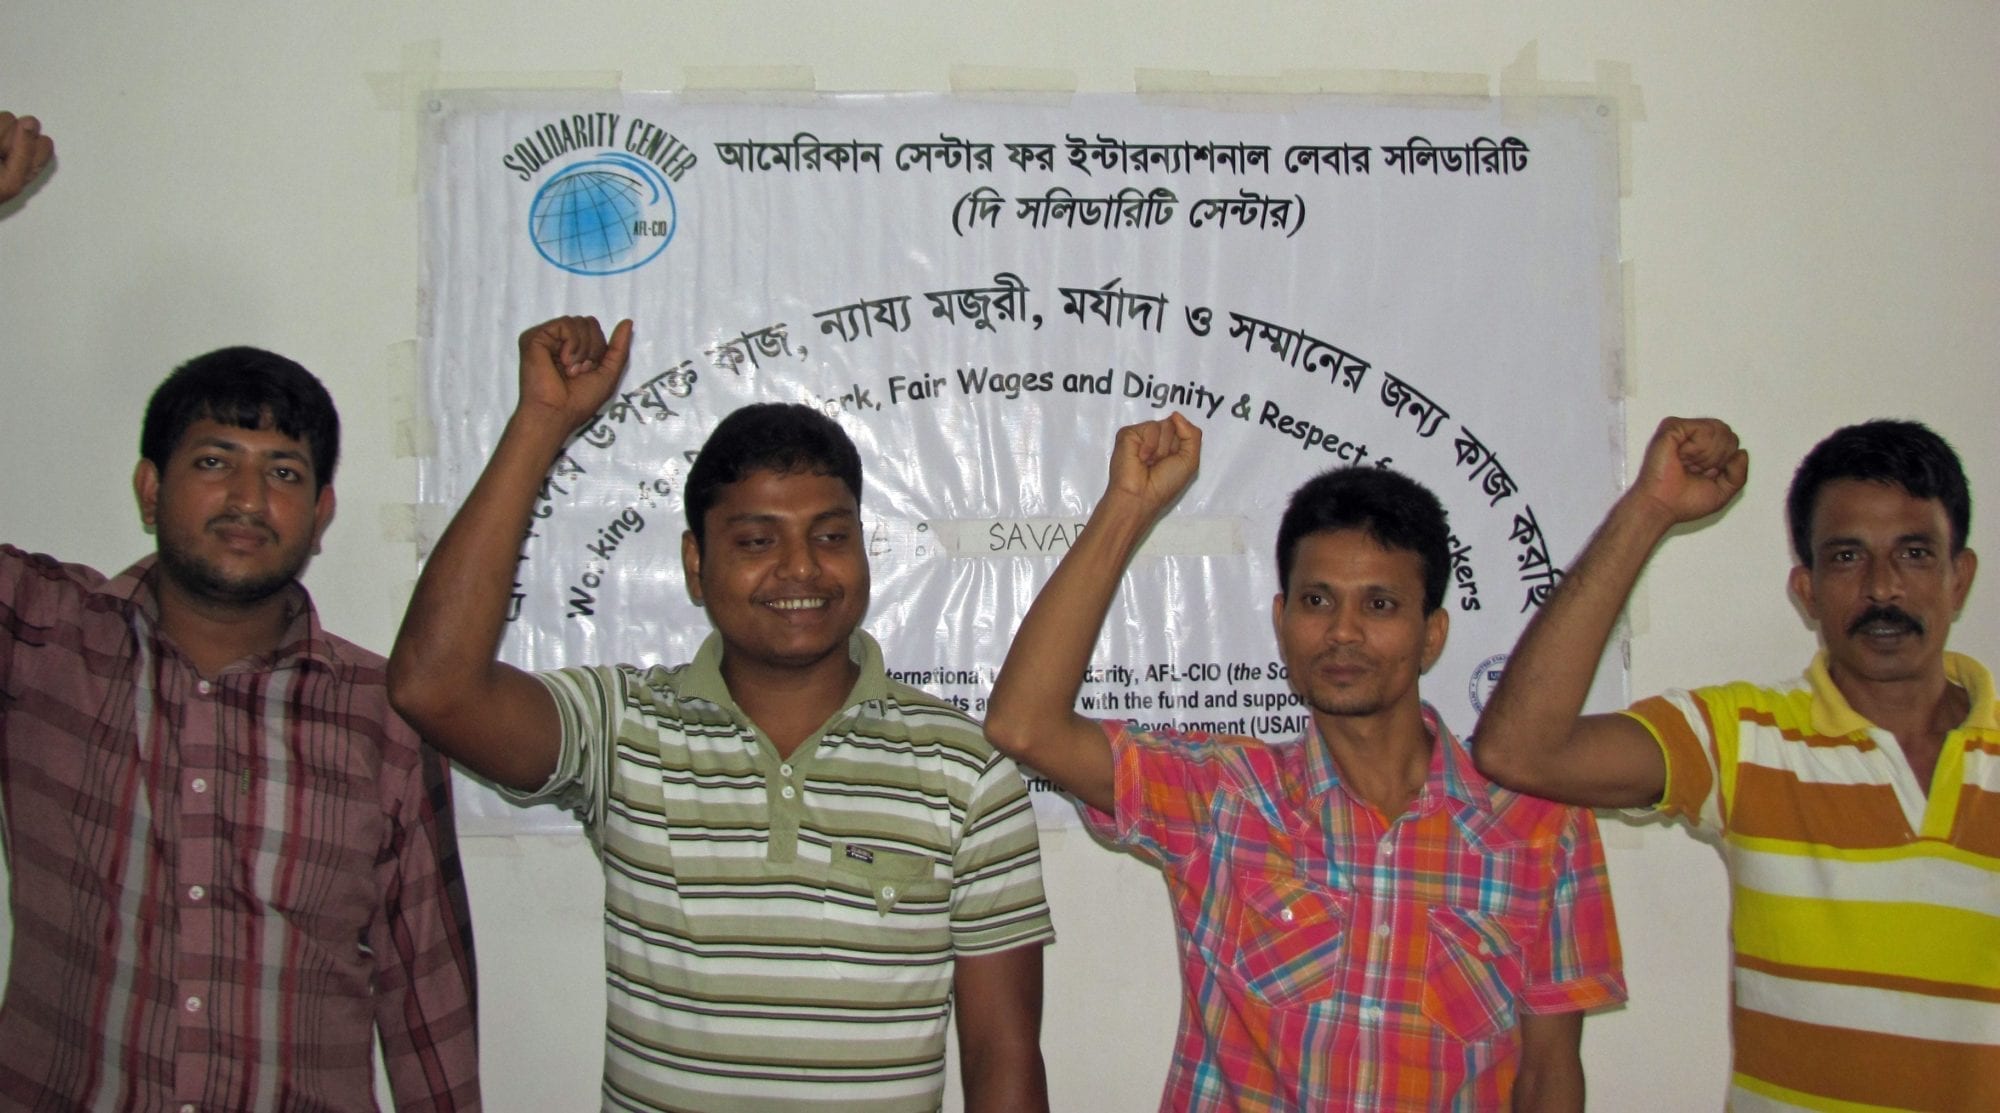 Bangladesh, EPZ, garment workers, Solidarity Center, human rights, labor rights